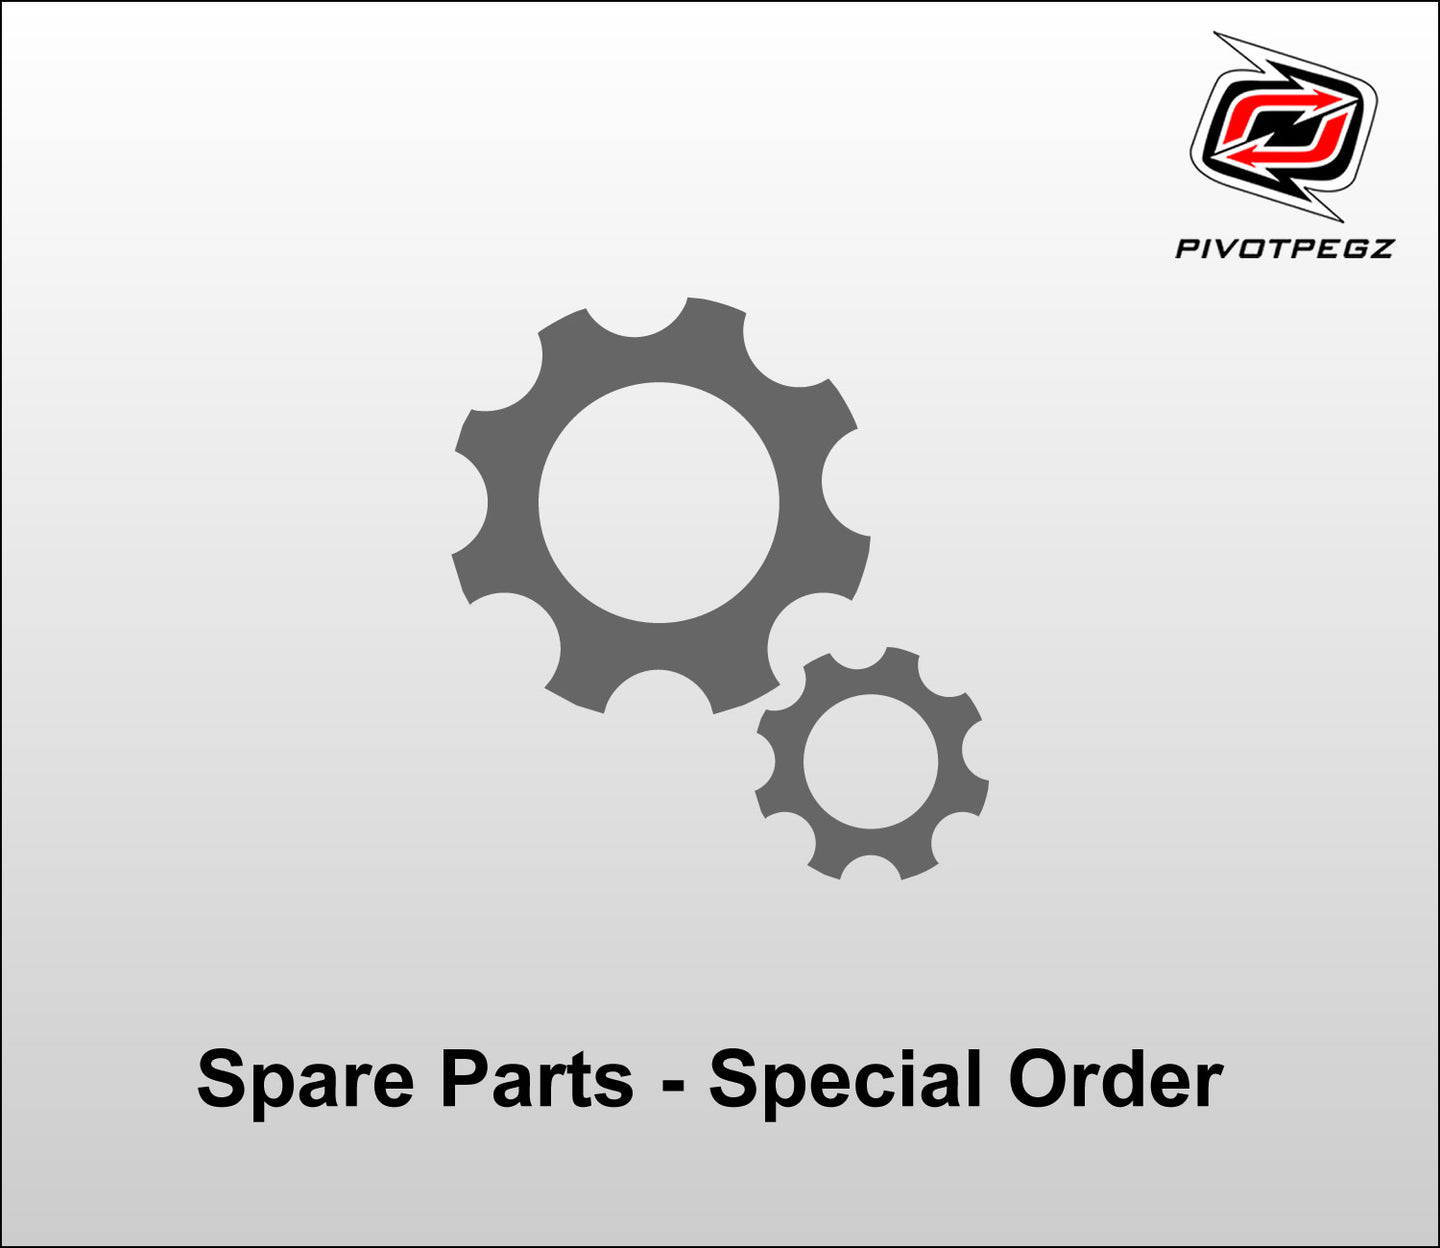 Spare Parts Special Order $15